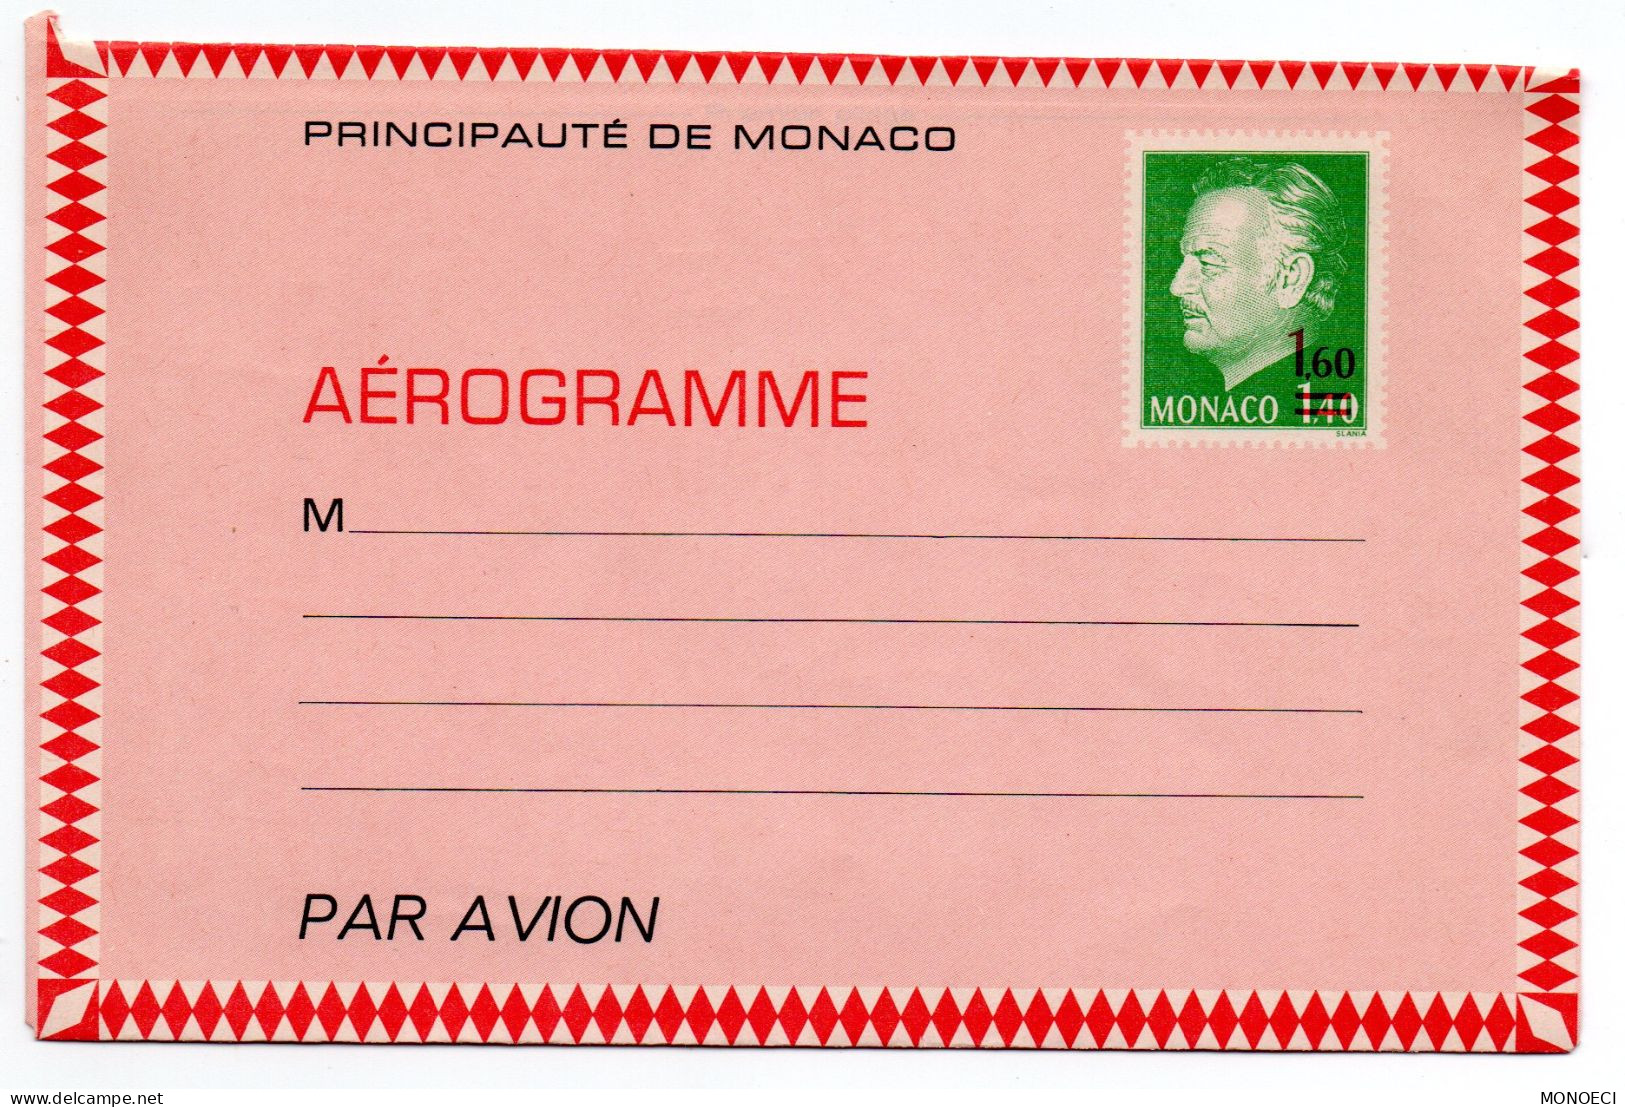 MONACO -- MONTE CARLO -- Monégasque -- Entier Postal -- Aérogramme -- Prince Rainier III 1F40 Surchargé 1F60 (1976) - Interi Postali